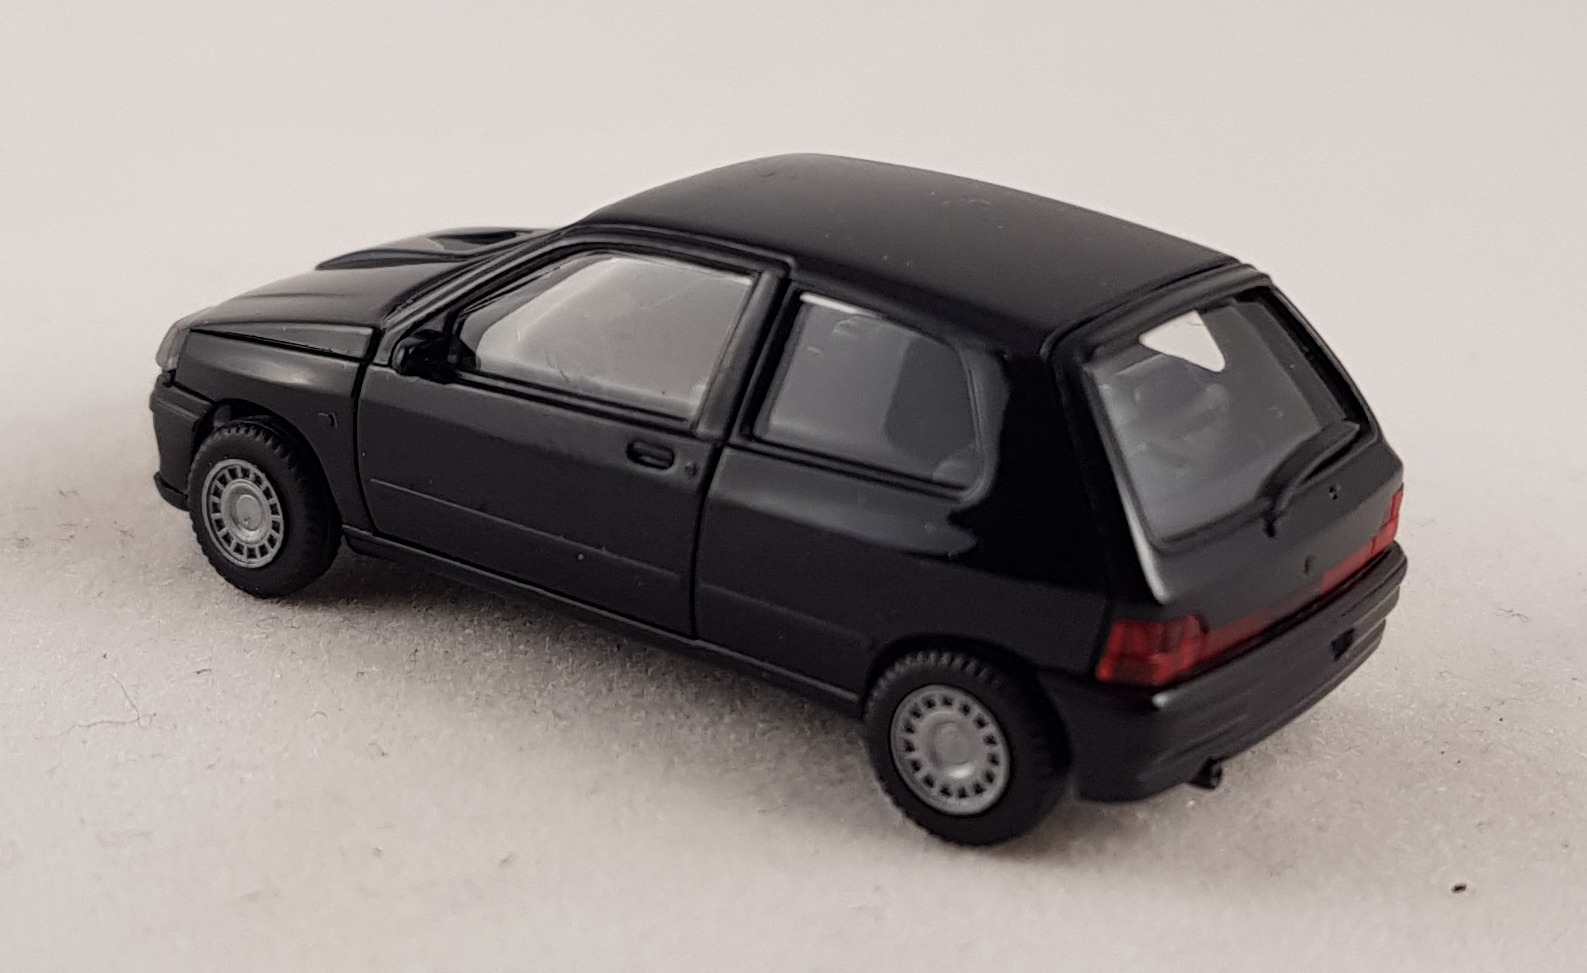 Herpa 021364 Renault Clio 16V, skala H0